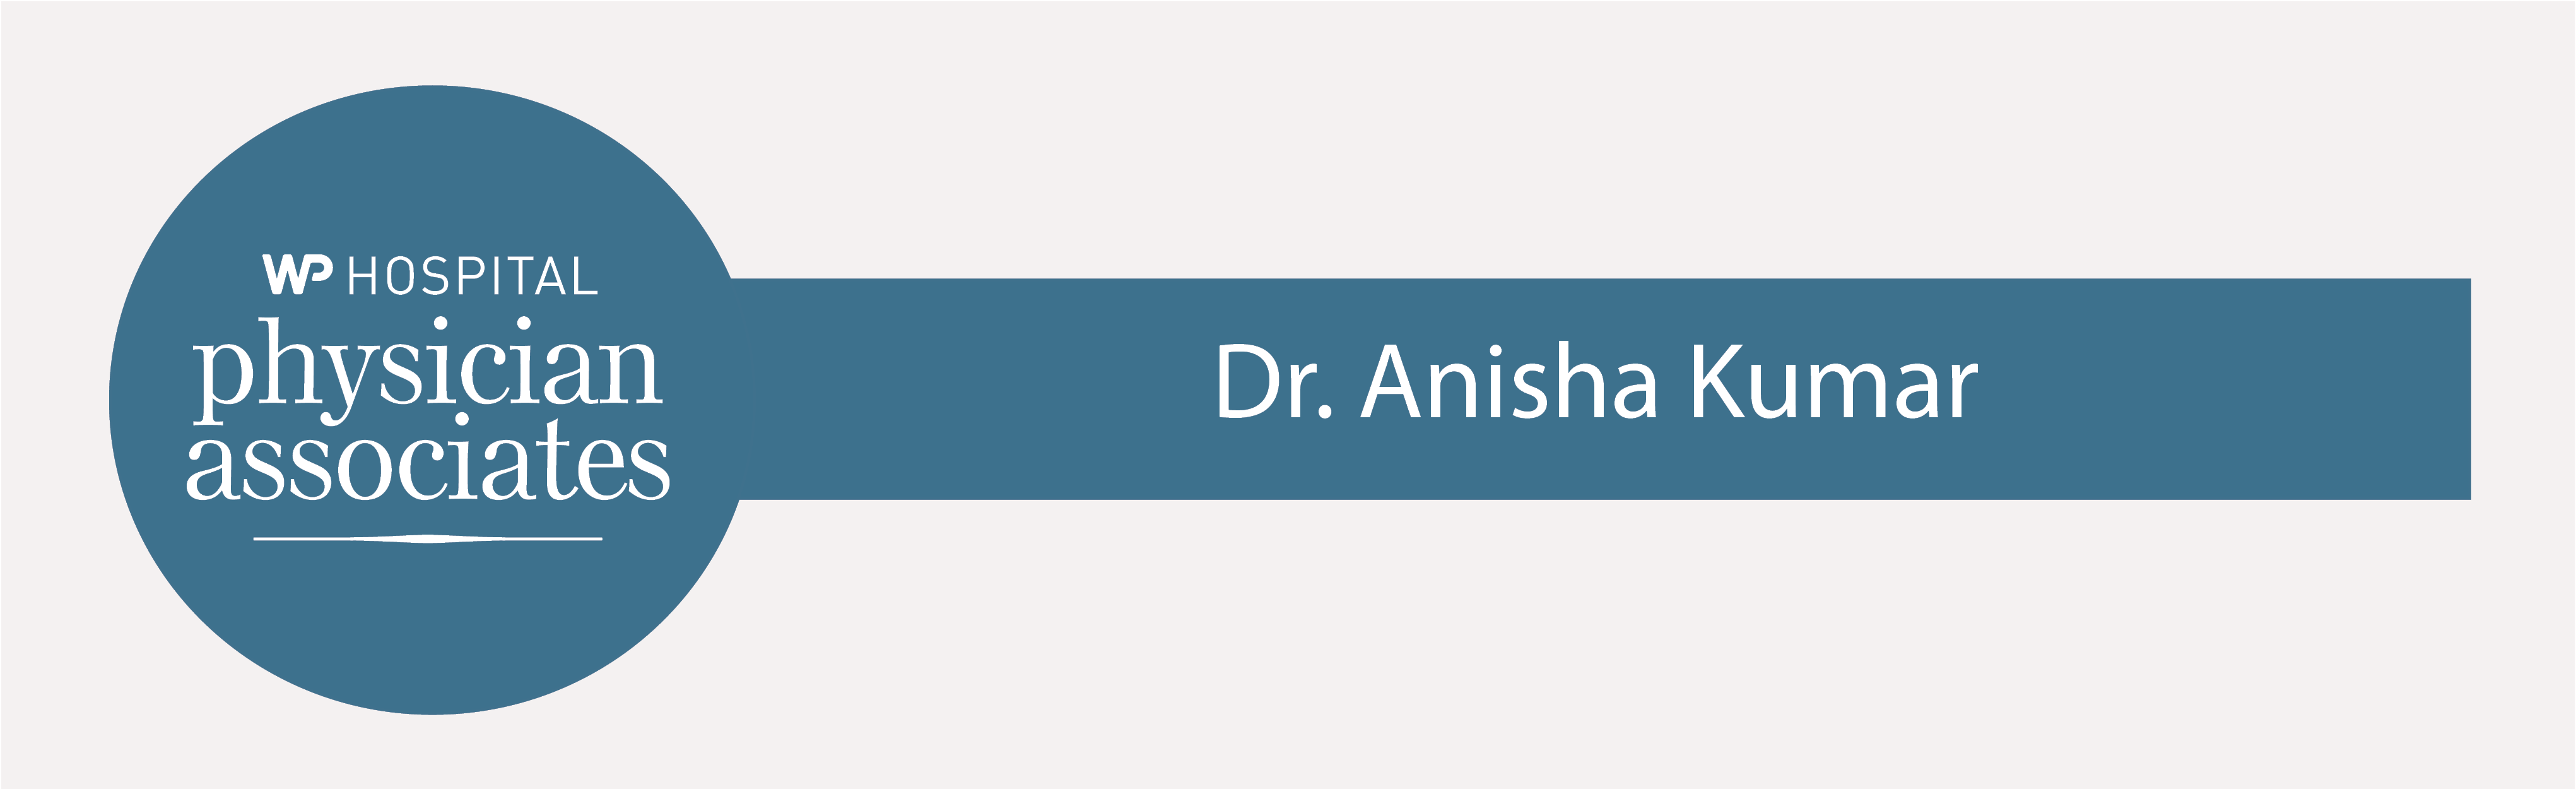 Dr. Anisha Kumar Named Director of Facial Plastic and Reconstructive Surgery at White Plains Hospital